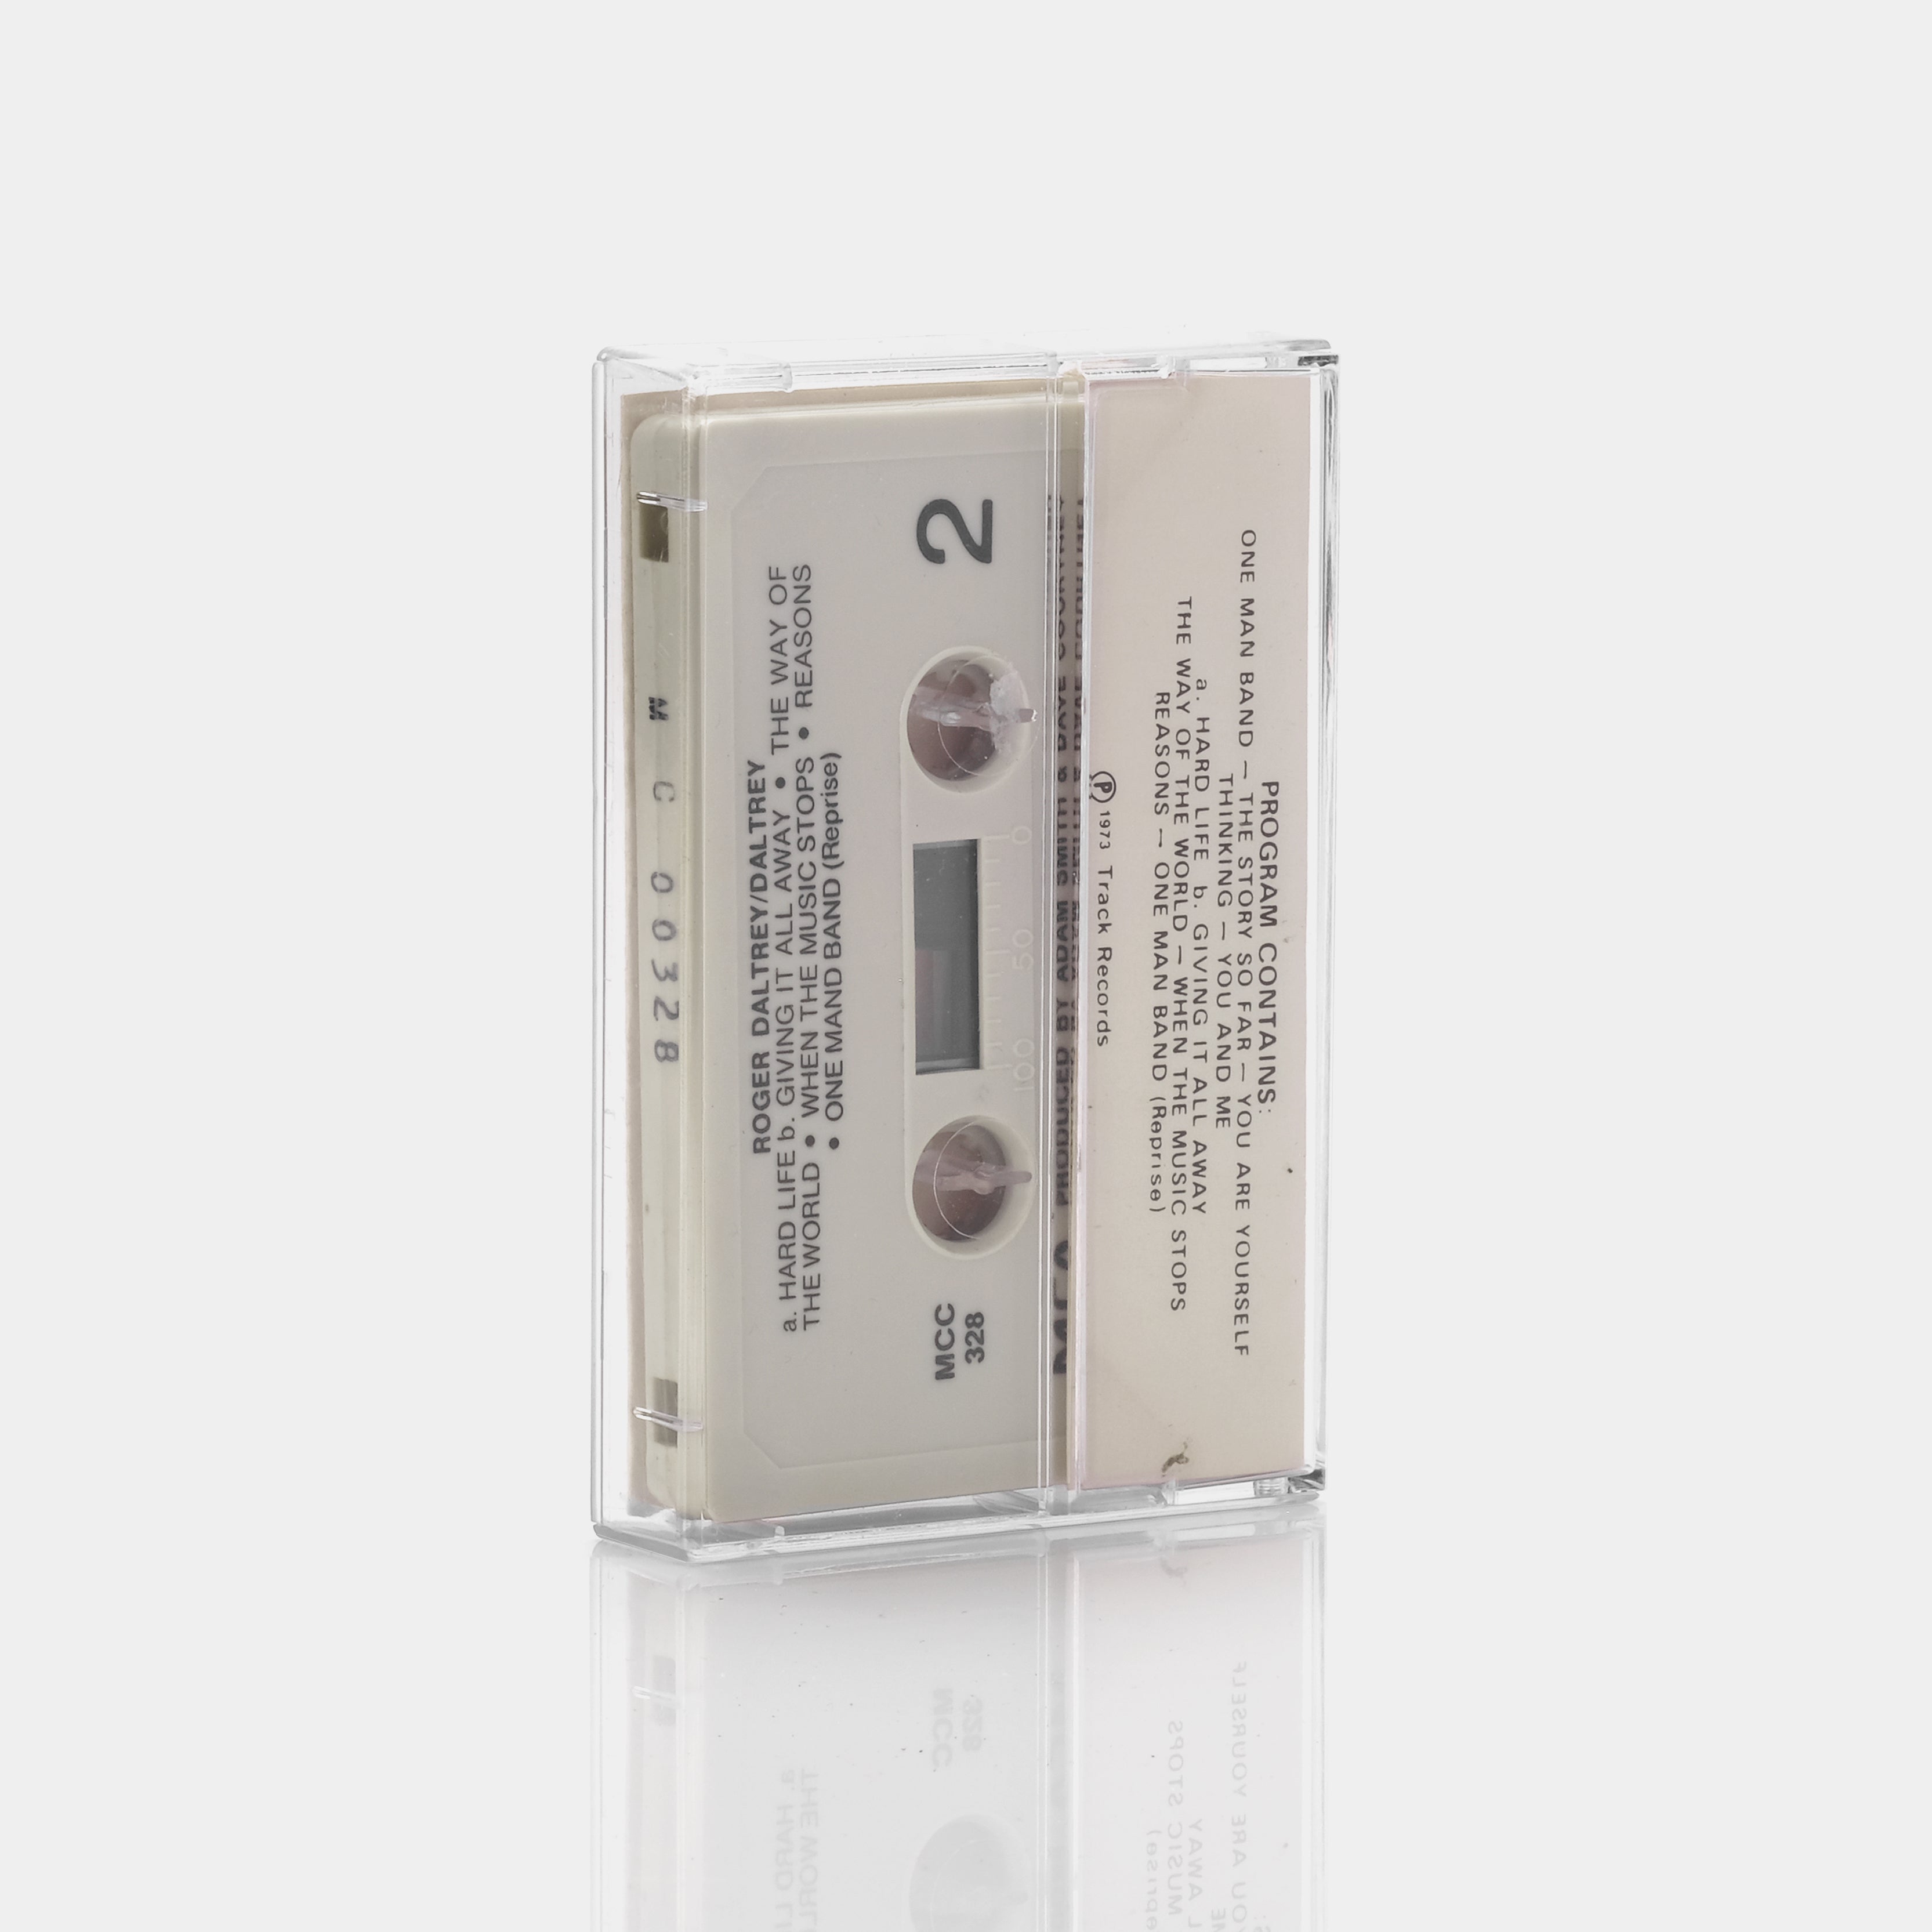 Roger Daltrey - Daltrey Cassette Tape